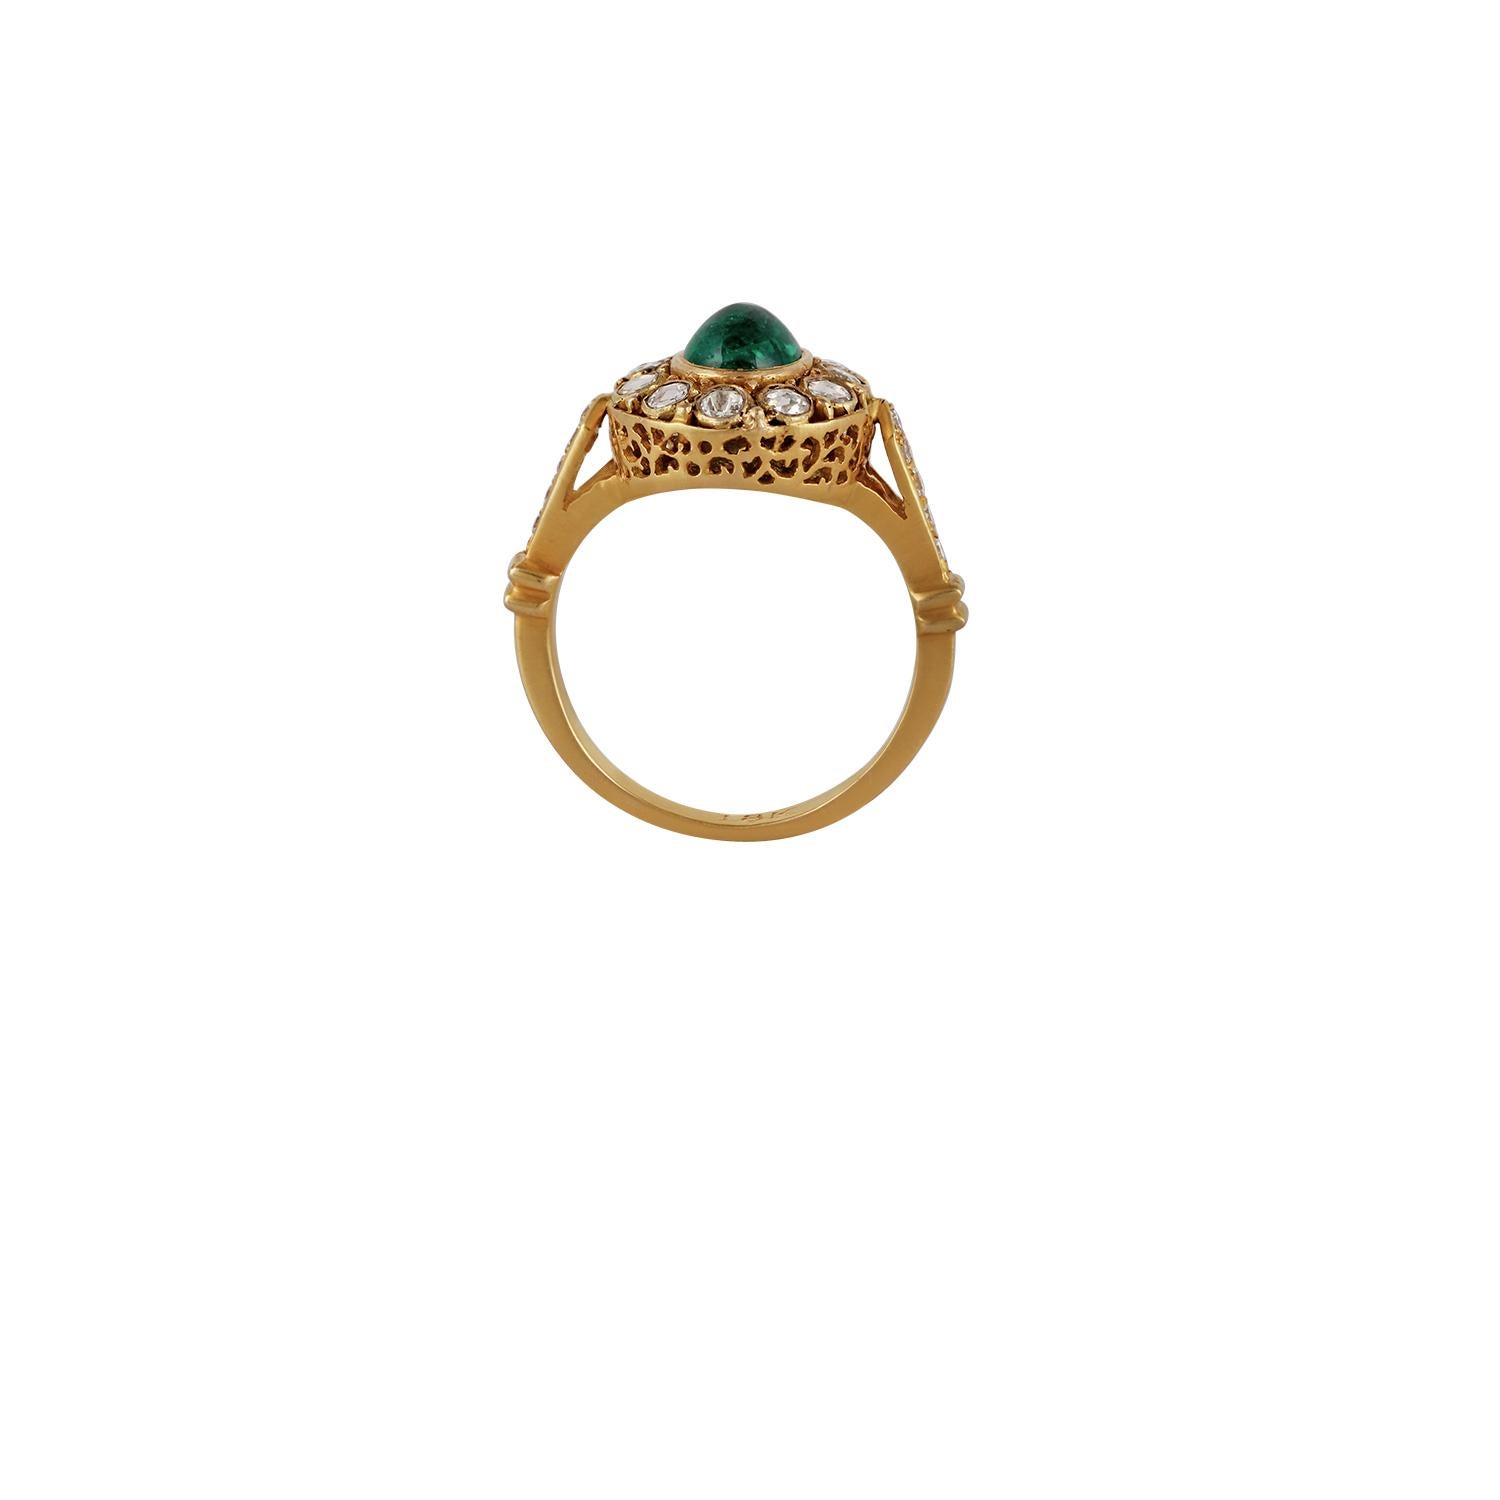 Oval Shaped Cabochon Emerald - 1.14 Carat
Round Shaped Diamond -0.53 Carat
18 Karat Yellow Gold - 5.27 Grams